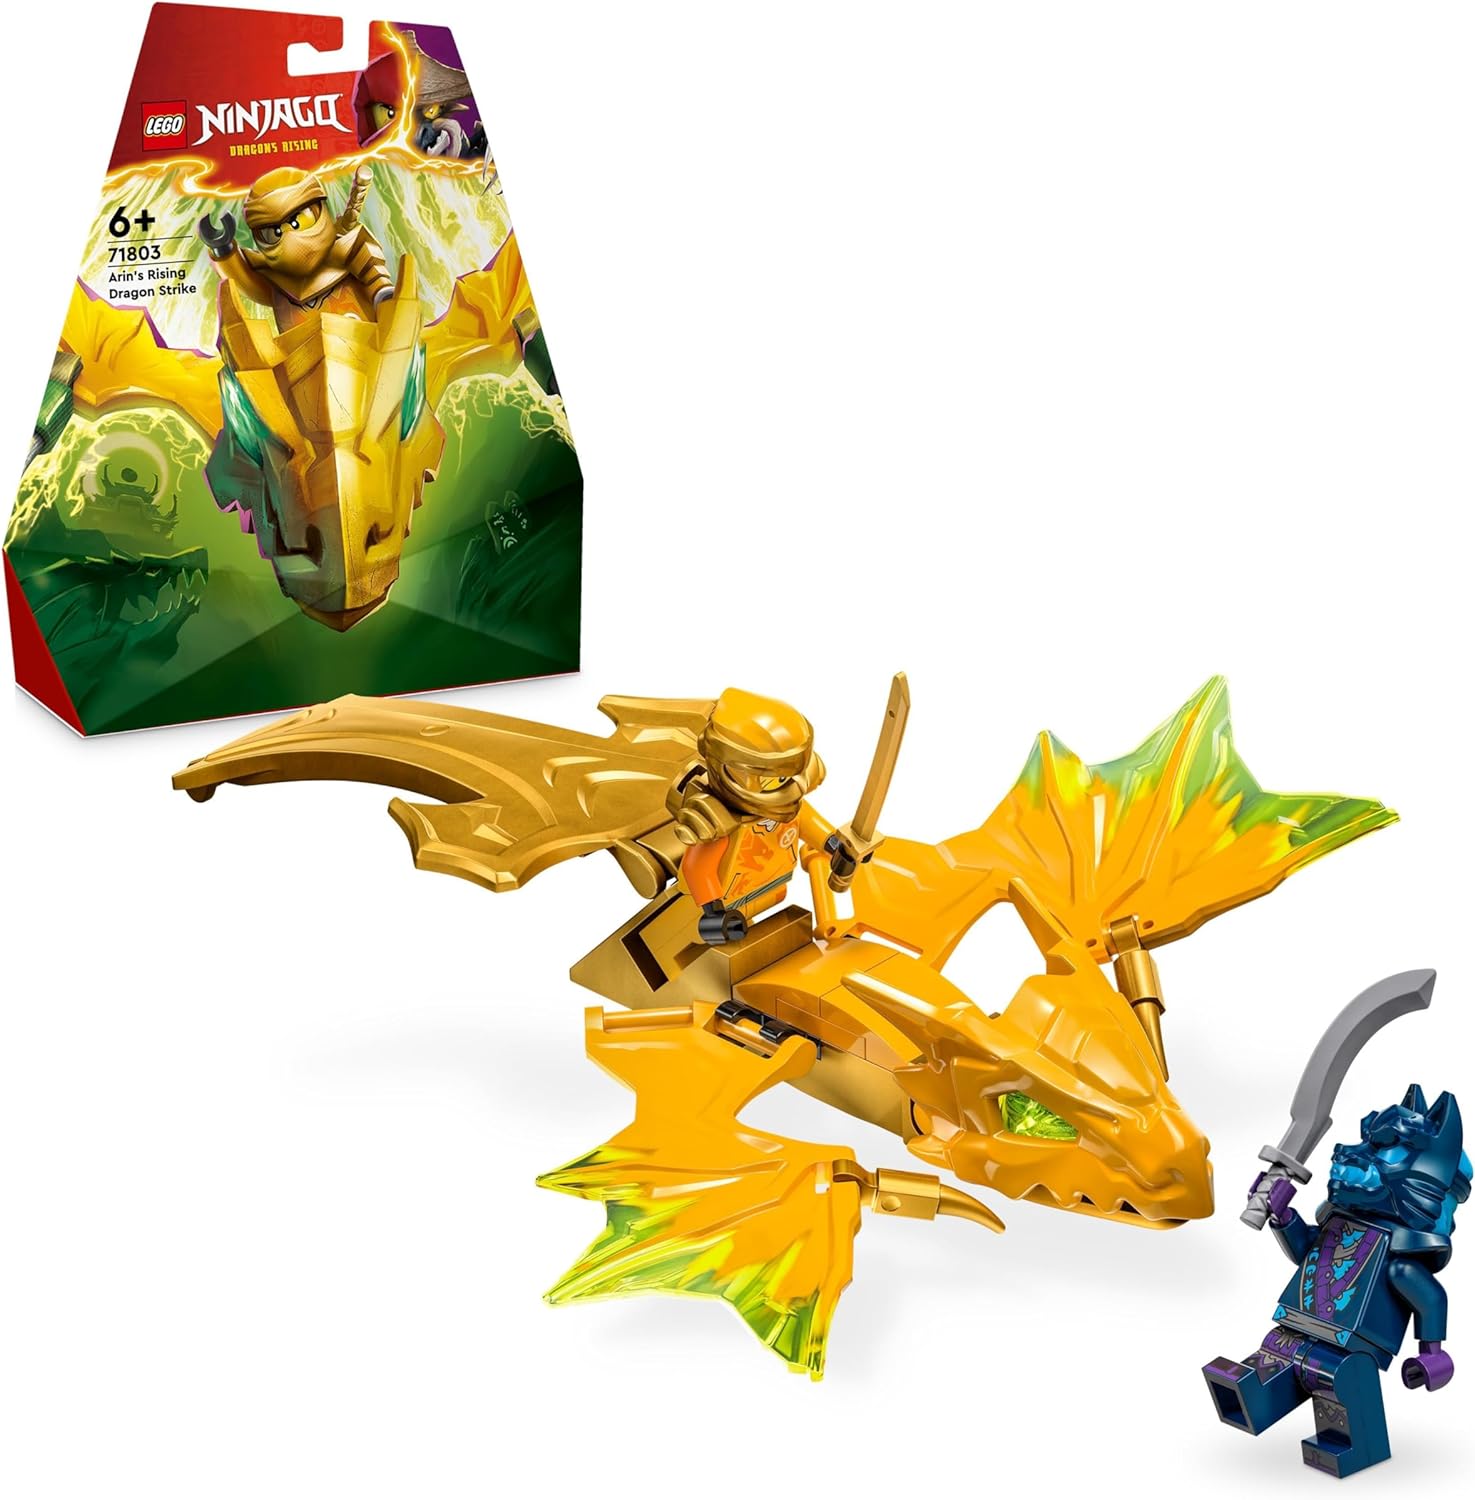 LEGO Ninjago Arins Dragon Glider, Ninja Set with Dragon Toy and Figures Including Arin Mini Figure with Mini Katana, Small Gift for Boys and Girls from 6 Years 71803